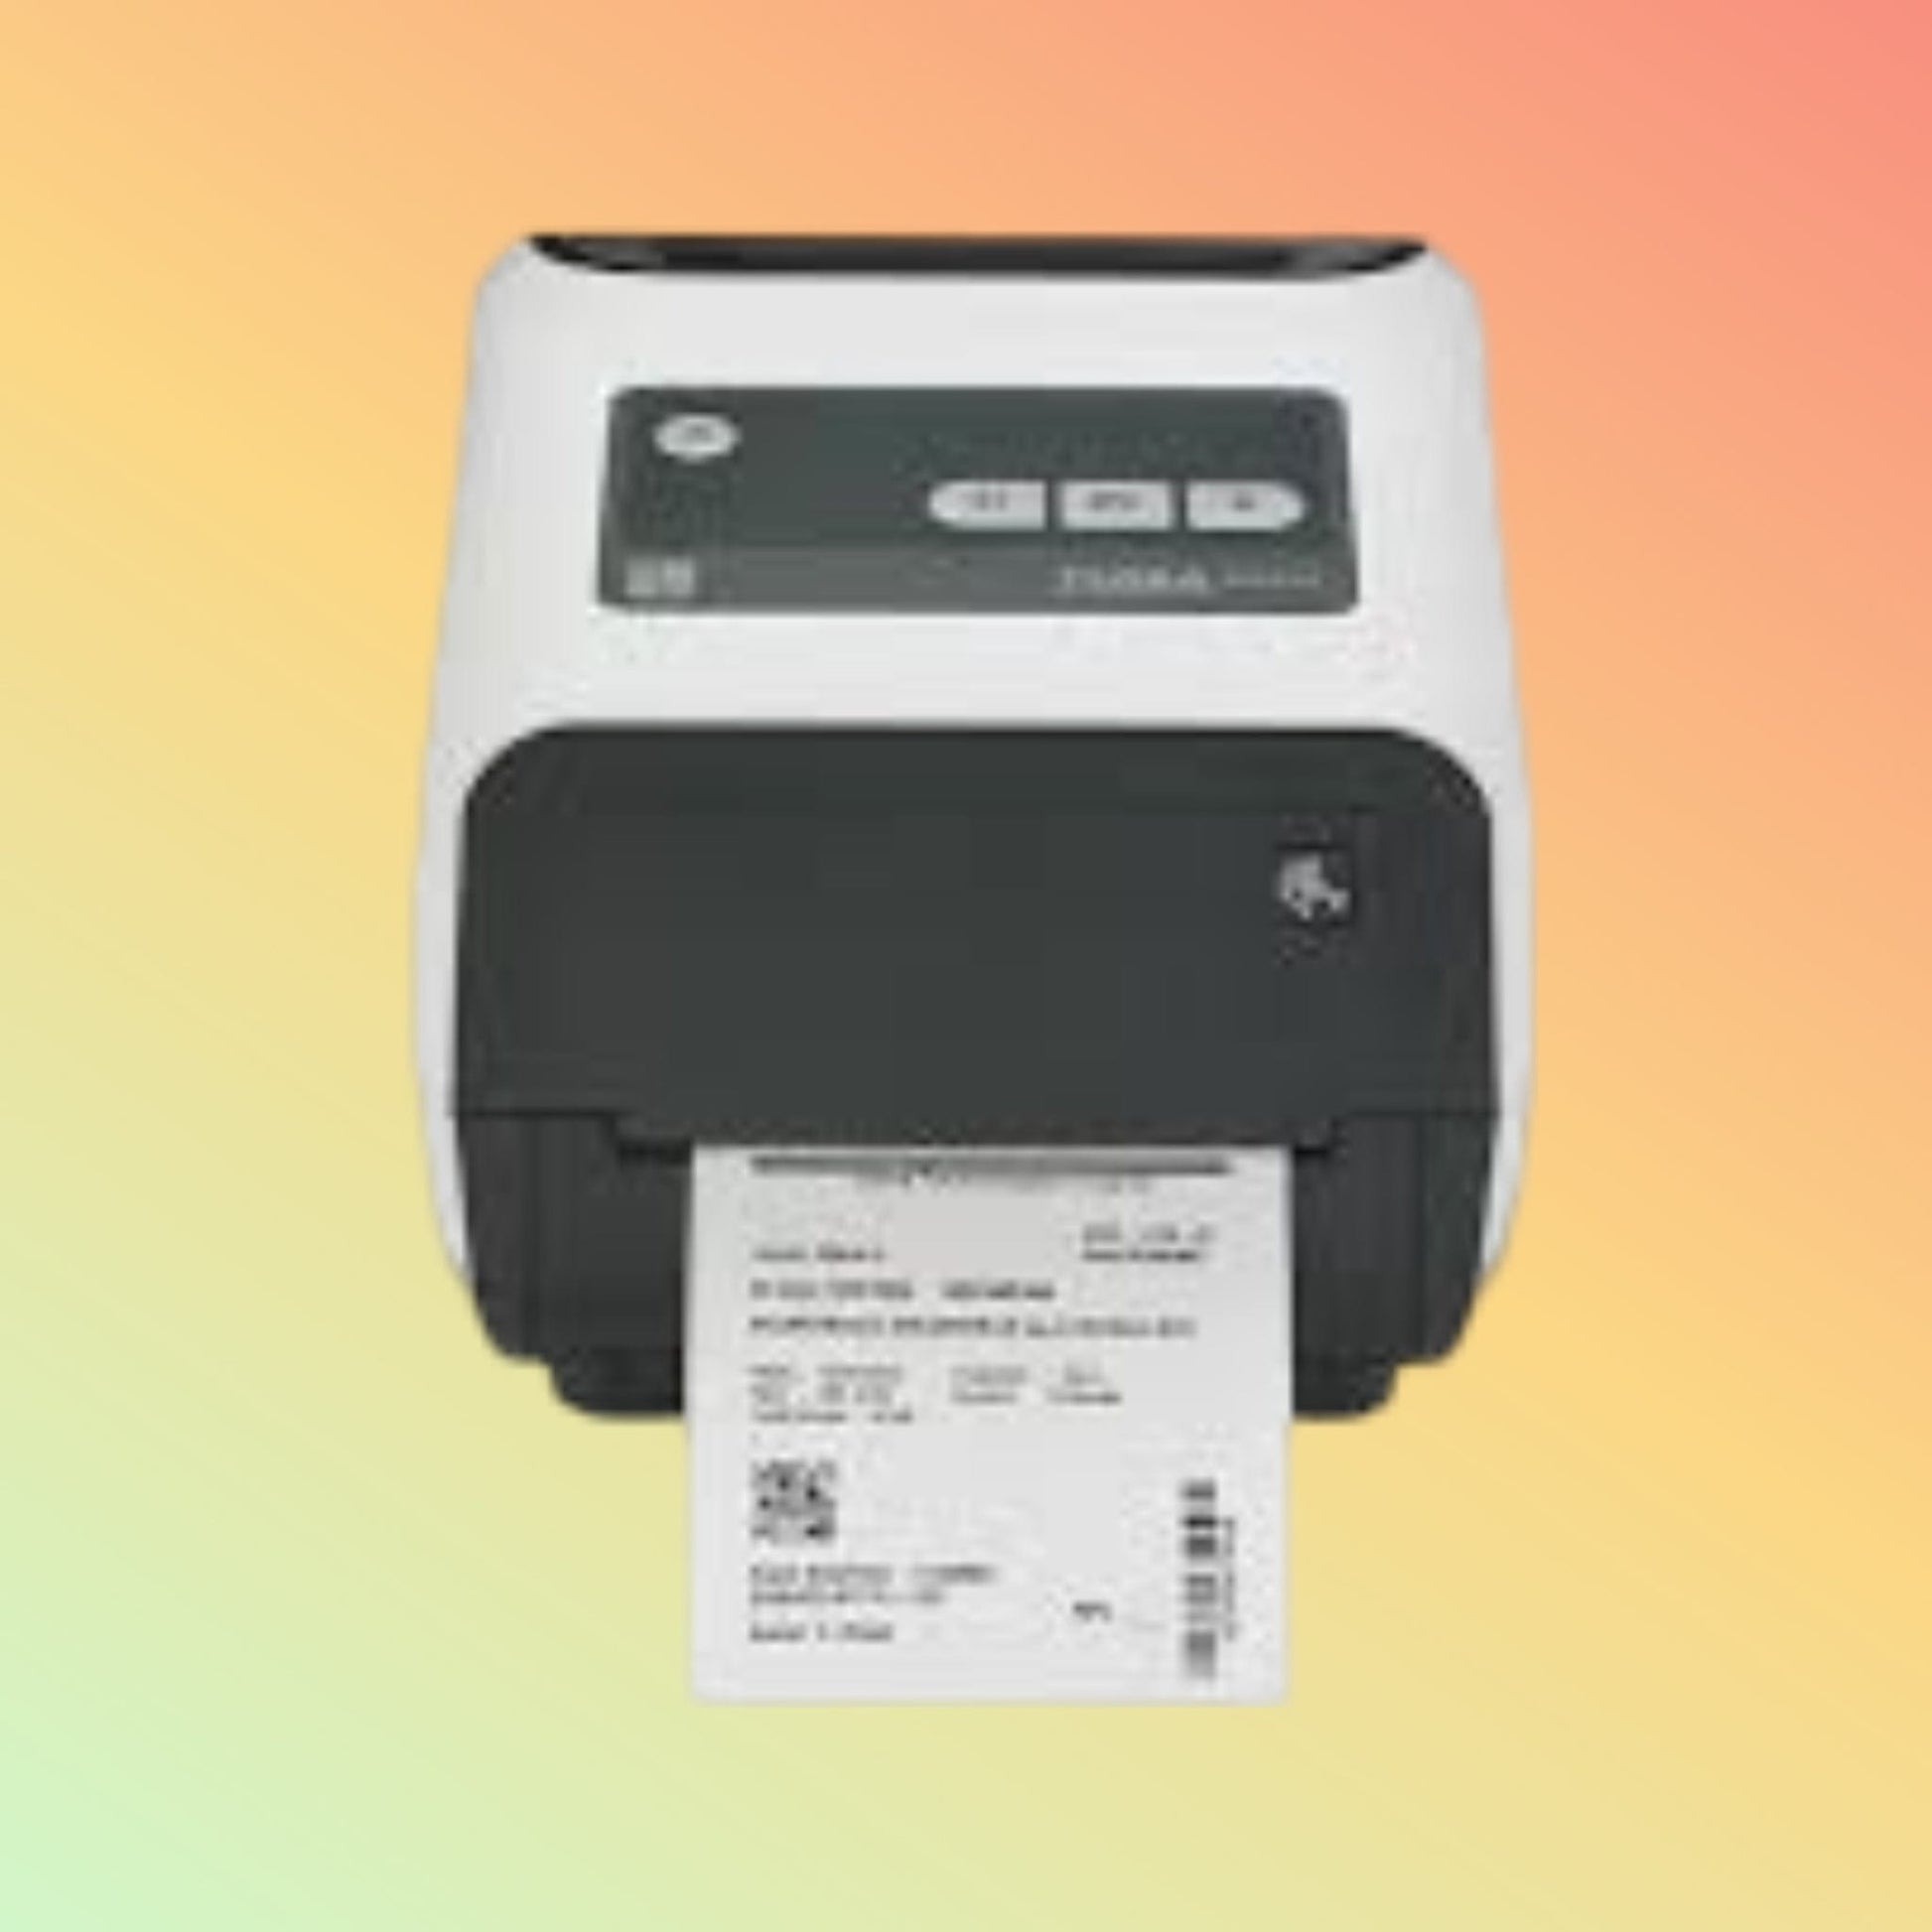 Barcode Printer - Zebra ZD420 - Neotech